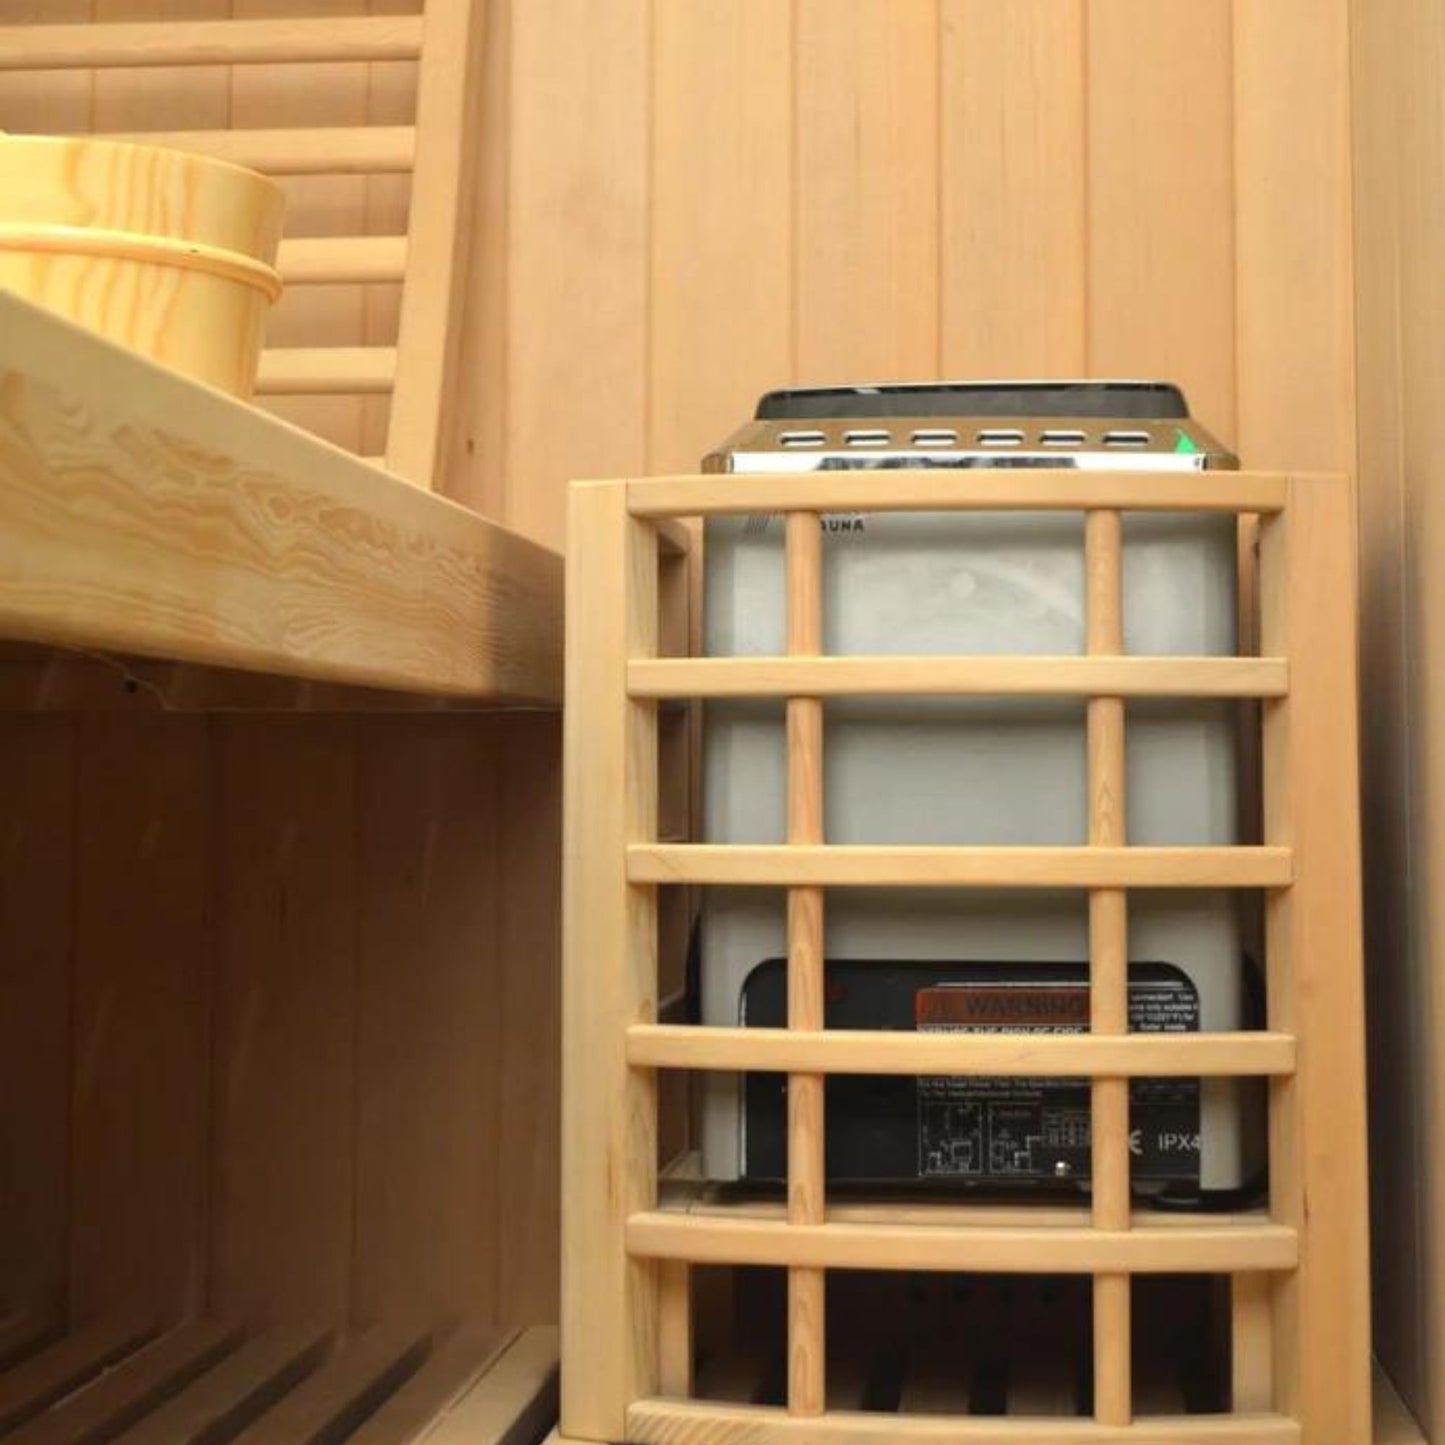 Kubix Sauna - Stove Heater - 2-3 Seater